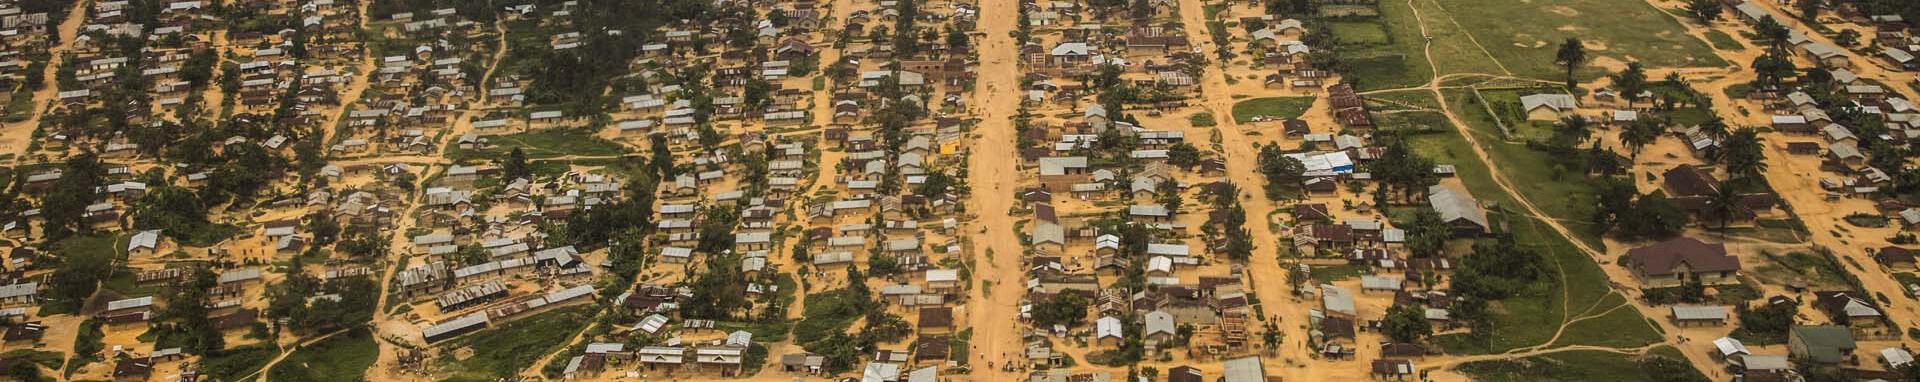 "World Bank Photo Collection Aerial view of OÔcha, north Kivu region, Democratic Republic of Congo. 2019 Photo: World Bank / Vincent Tremeau"